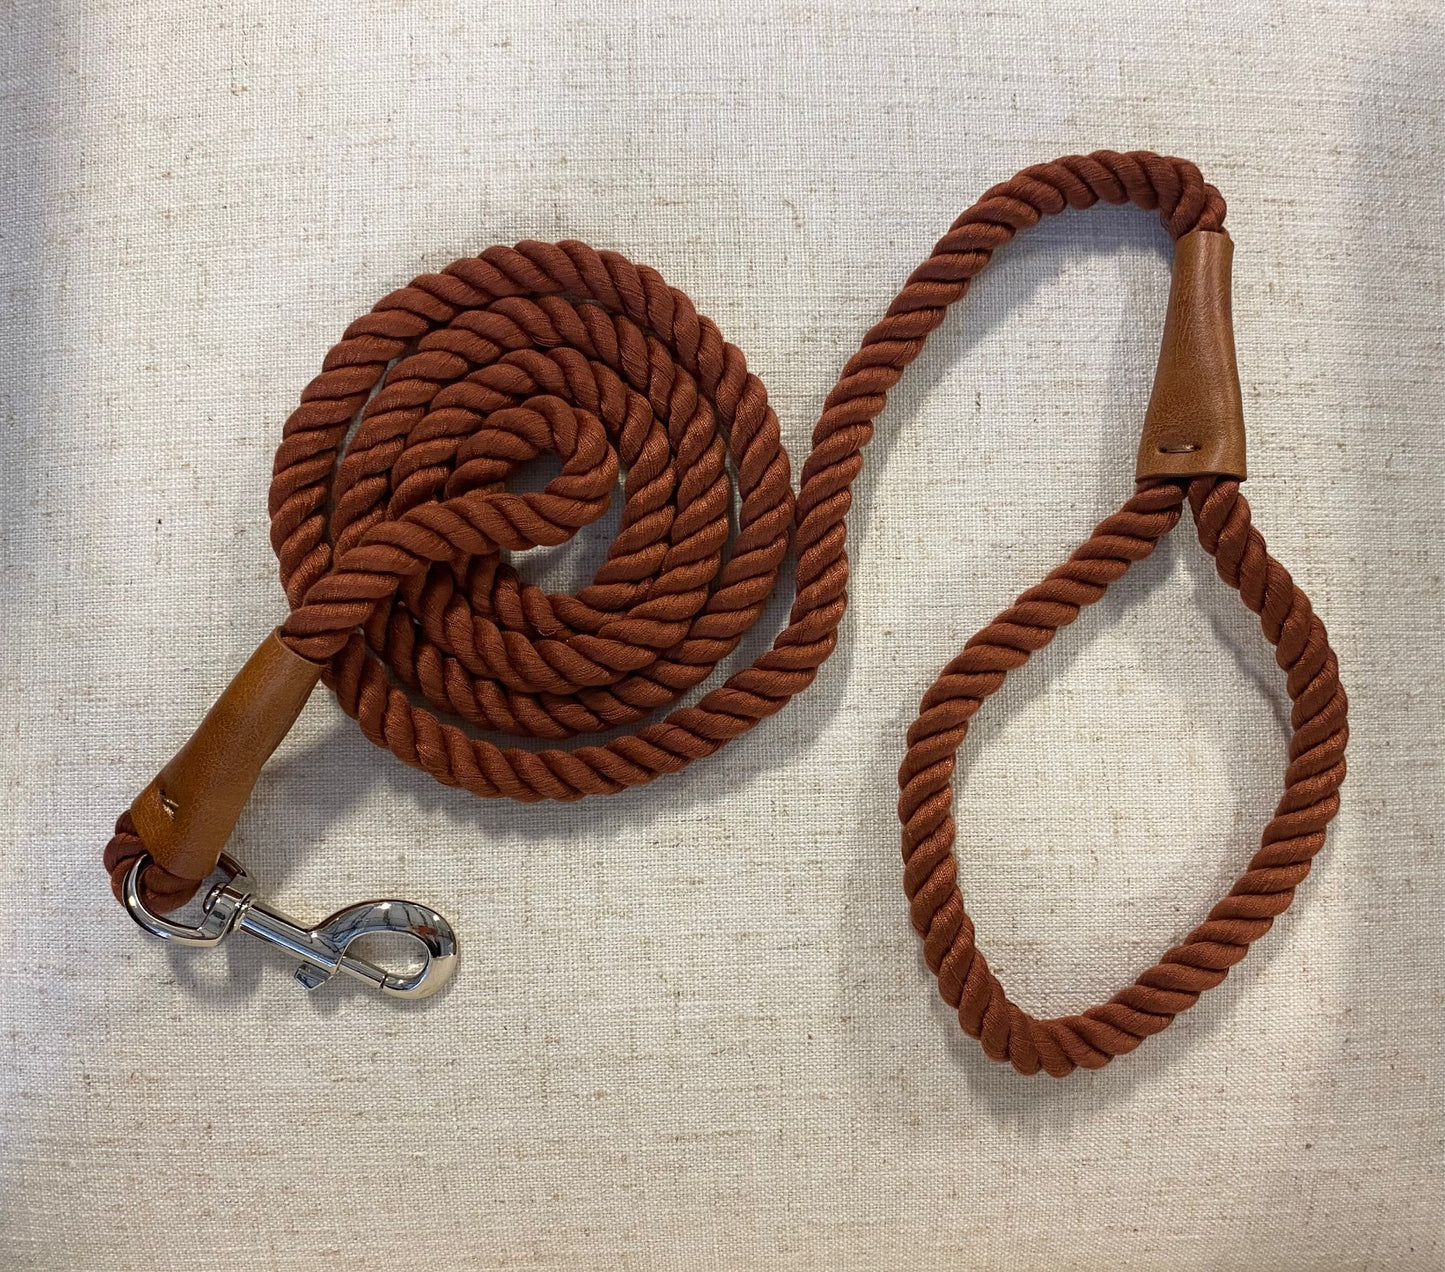 YUCFOREN 6FT Braided Cotton Rope Leash